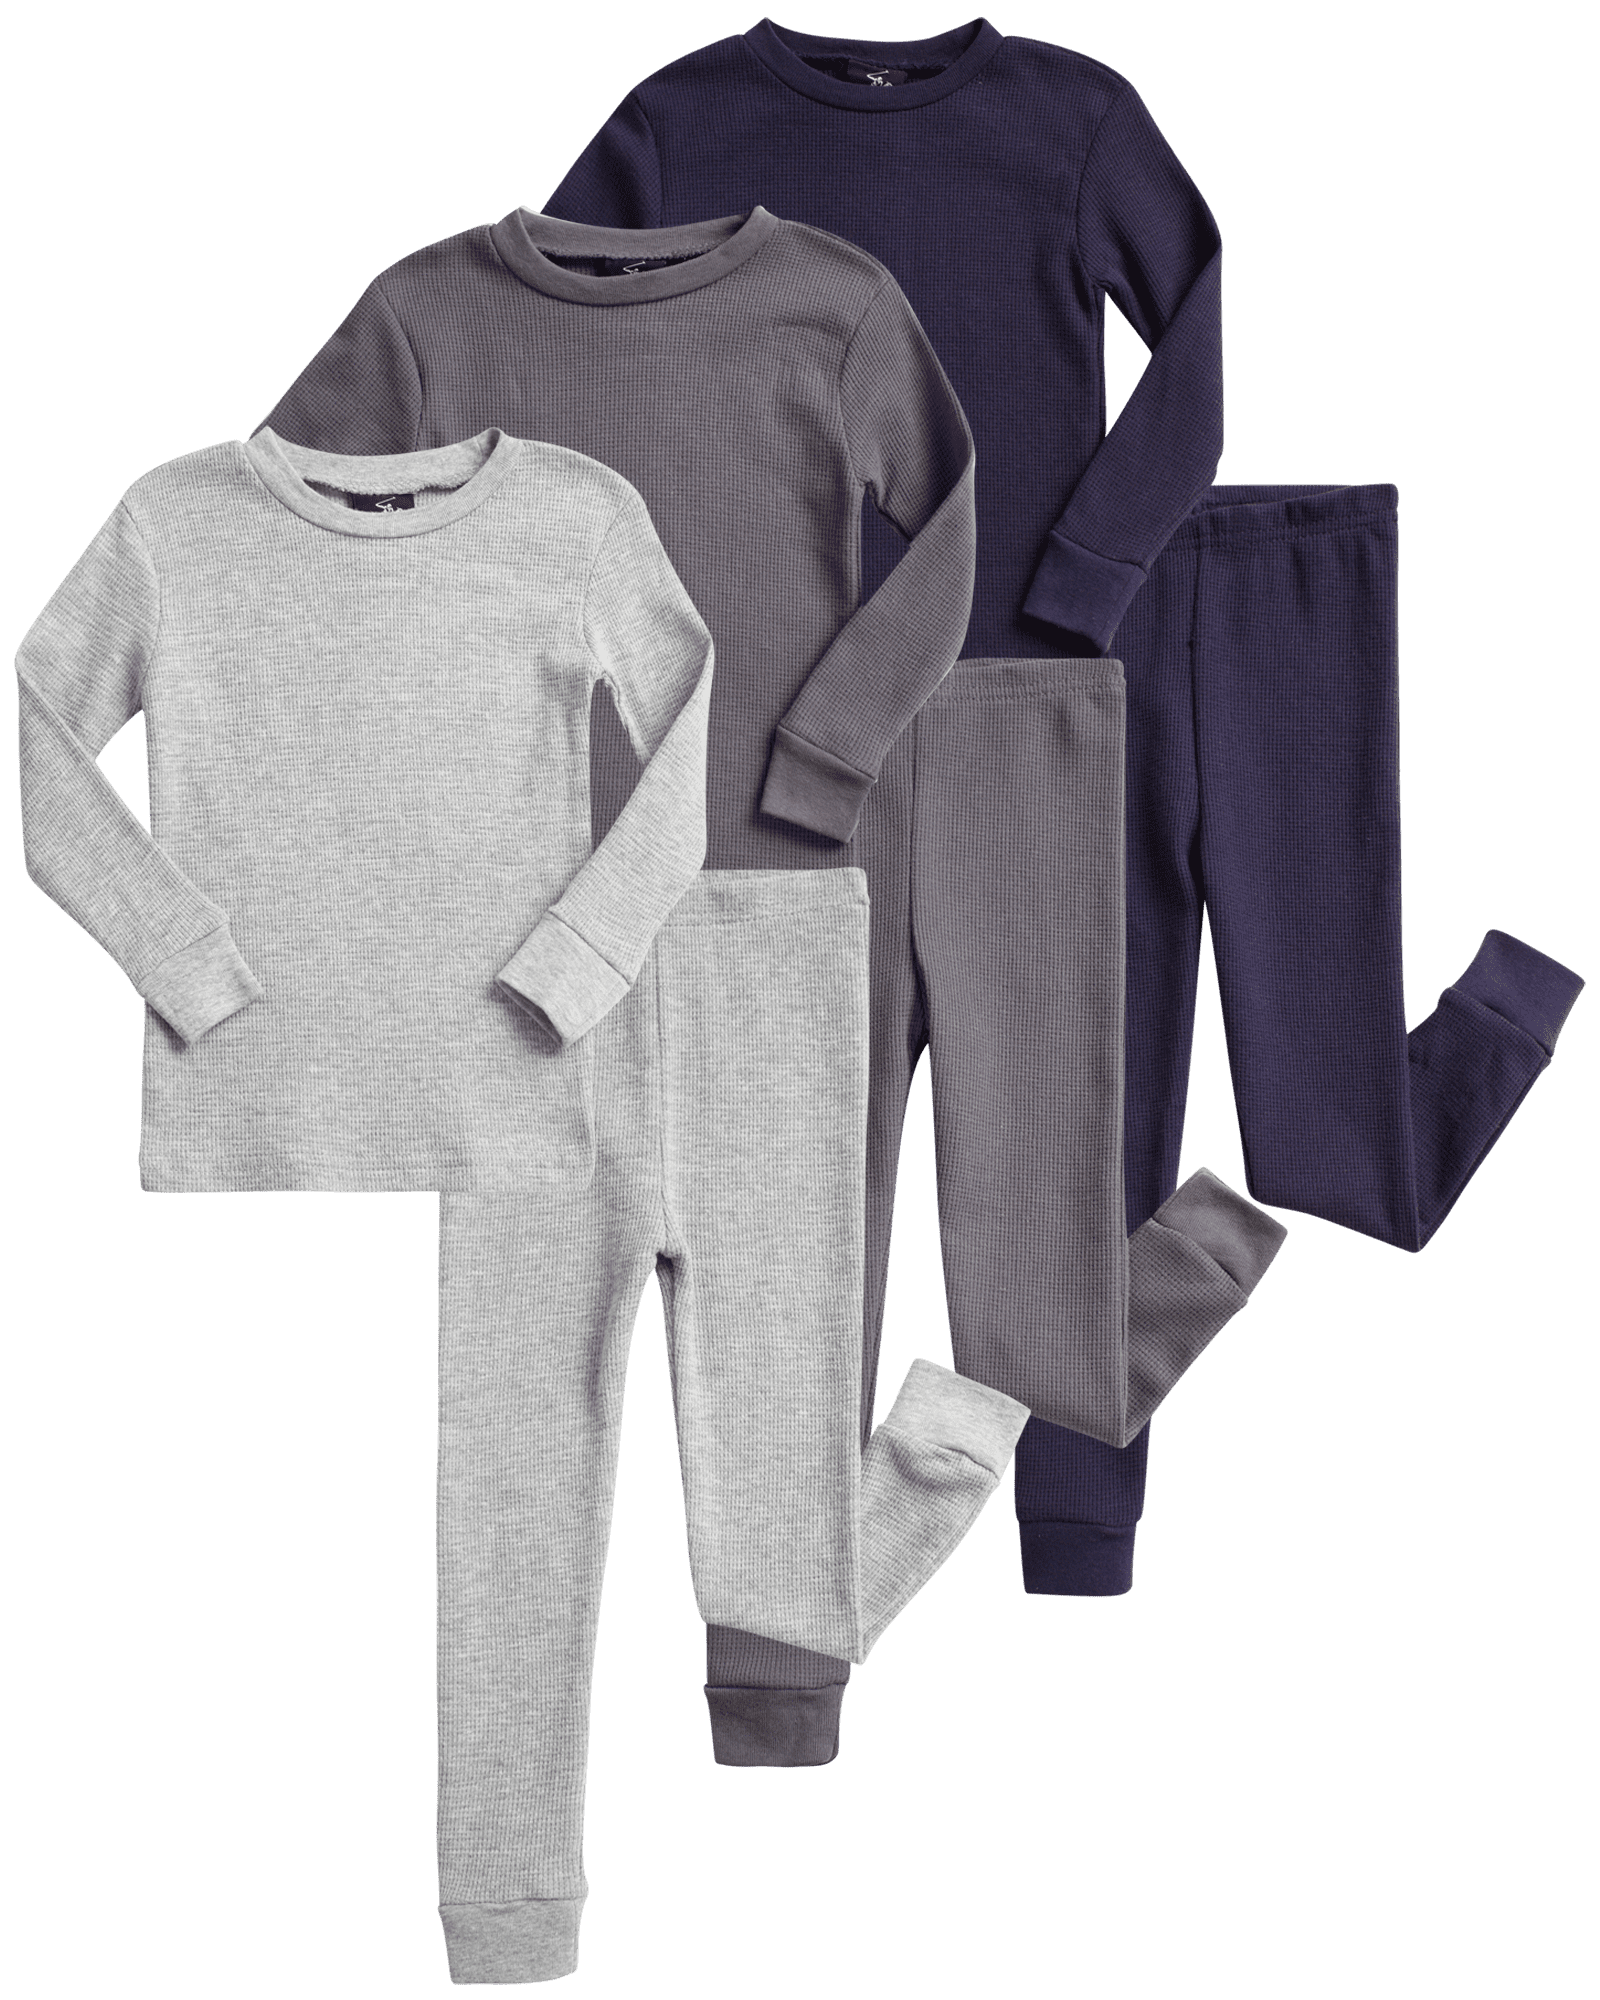 Beverly Hills Polo Club Baby Boys' Thermal Underwear - 6 Piece